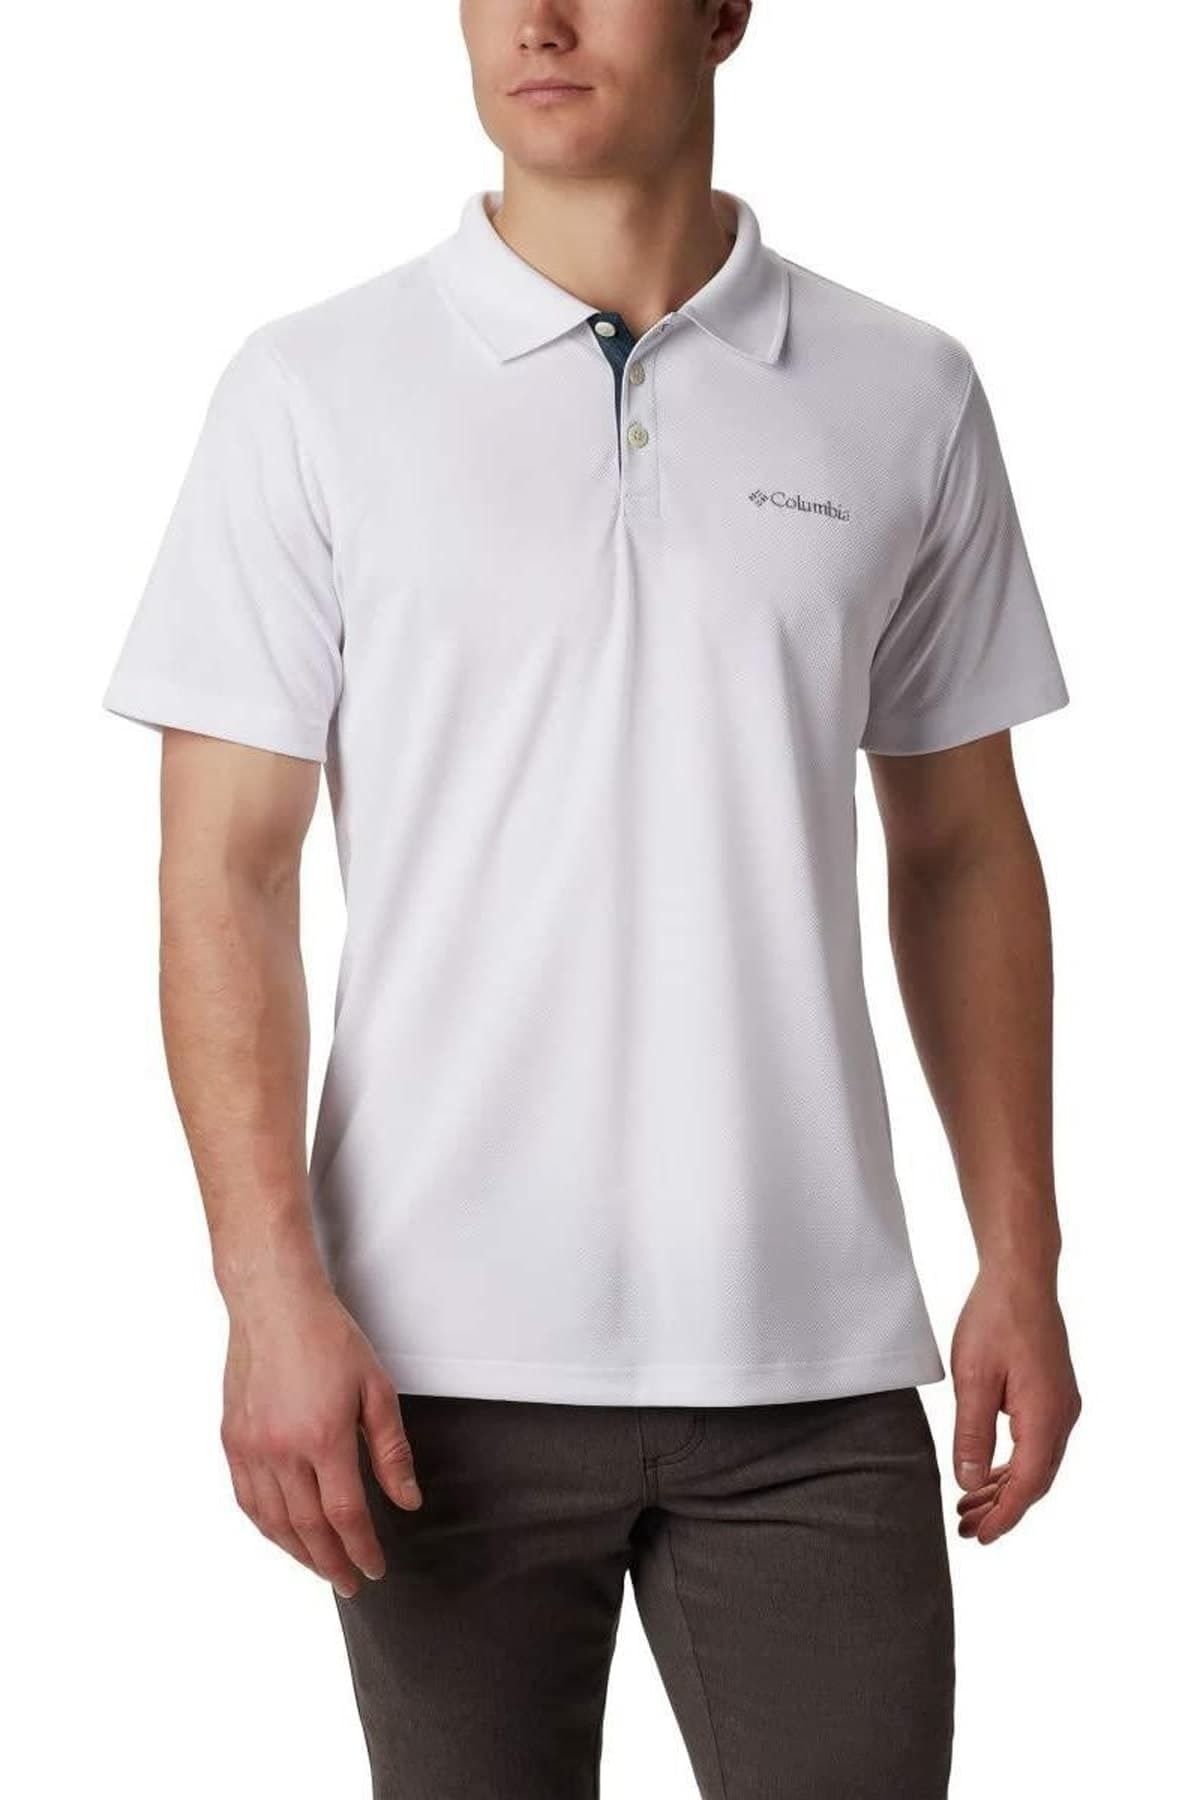 Columbia Utilizer Erkek Kısa Kollu Polo T-shirt - Am0126